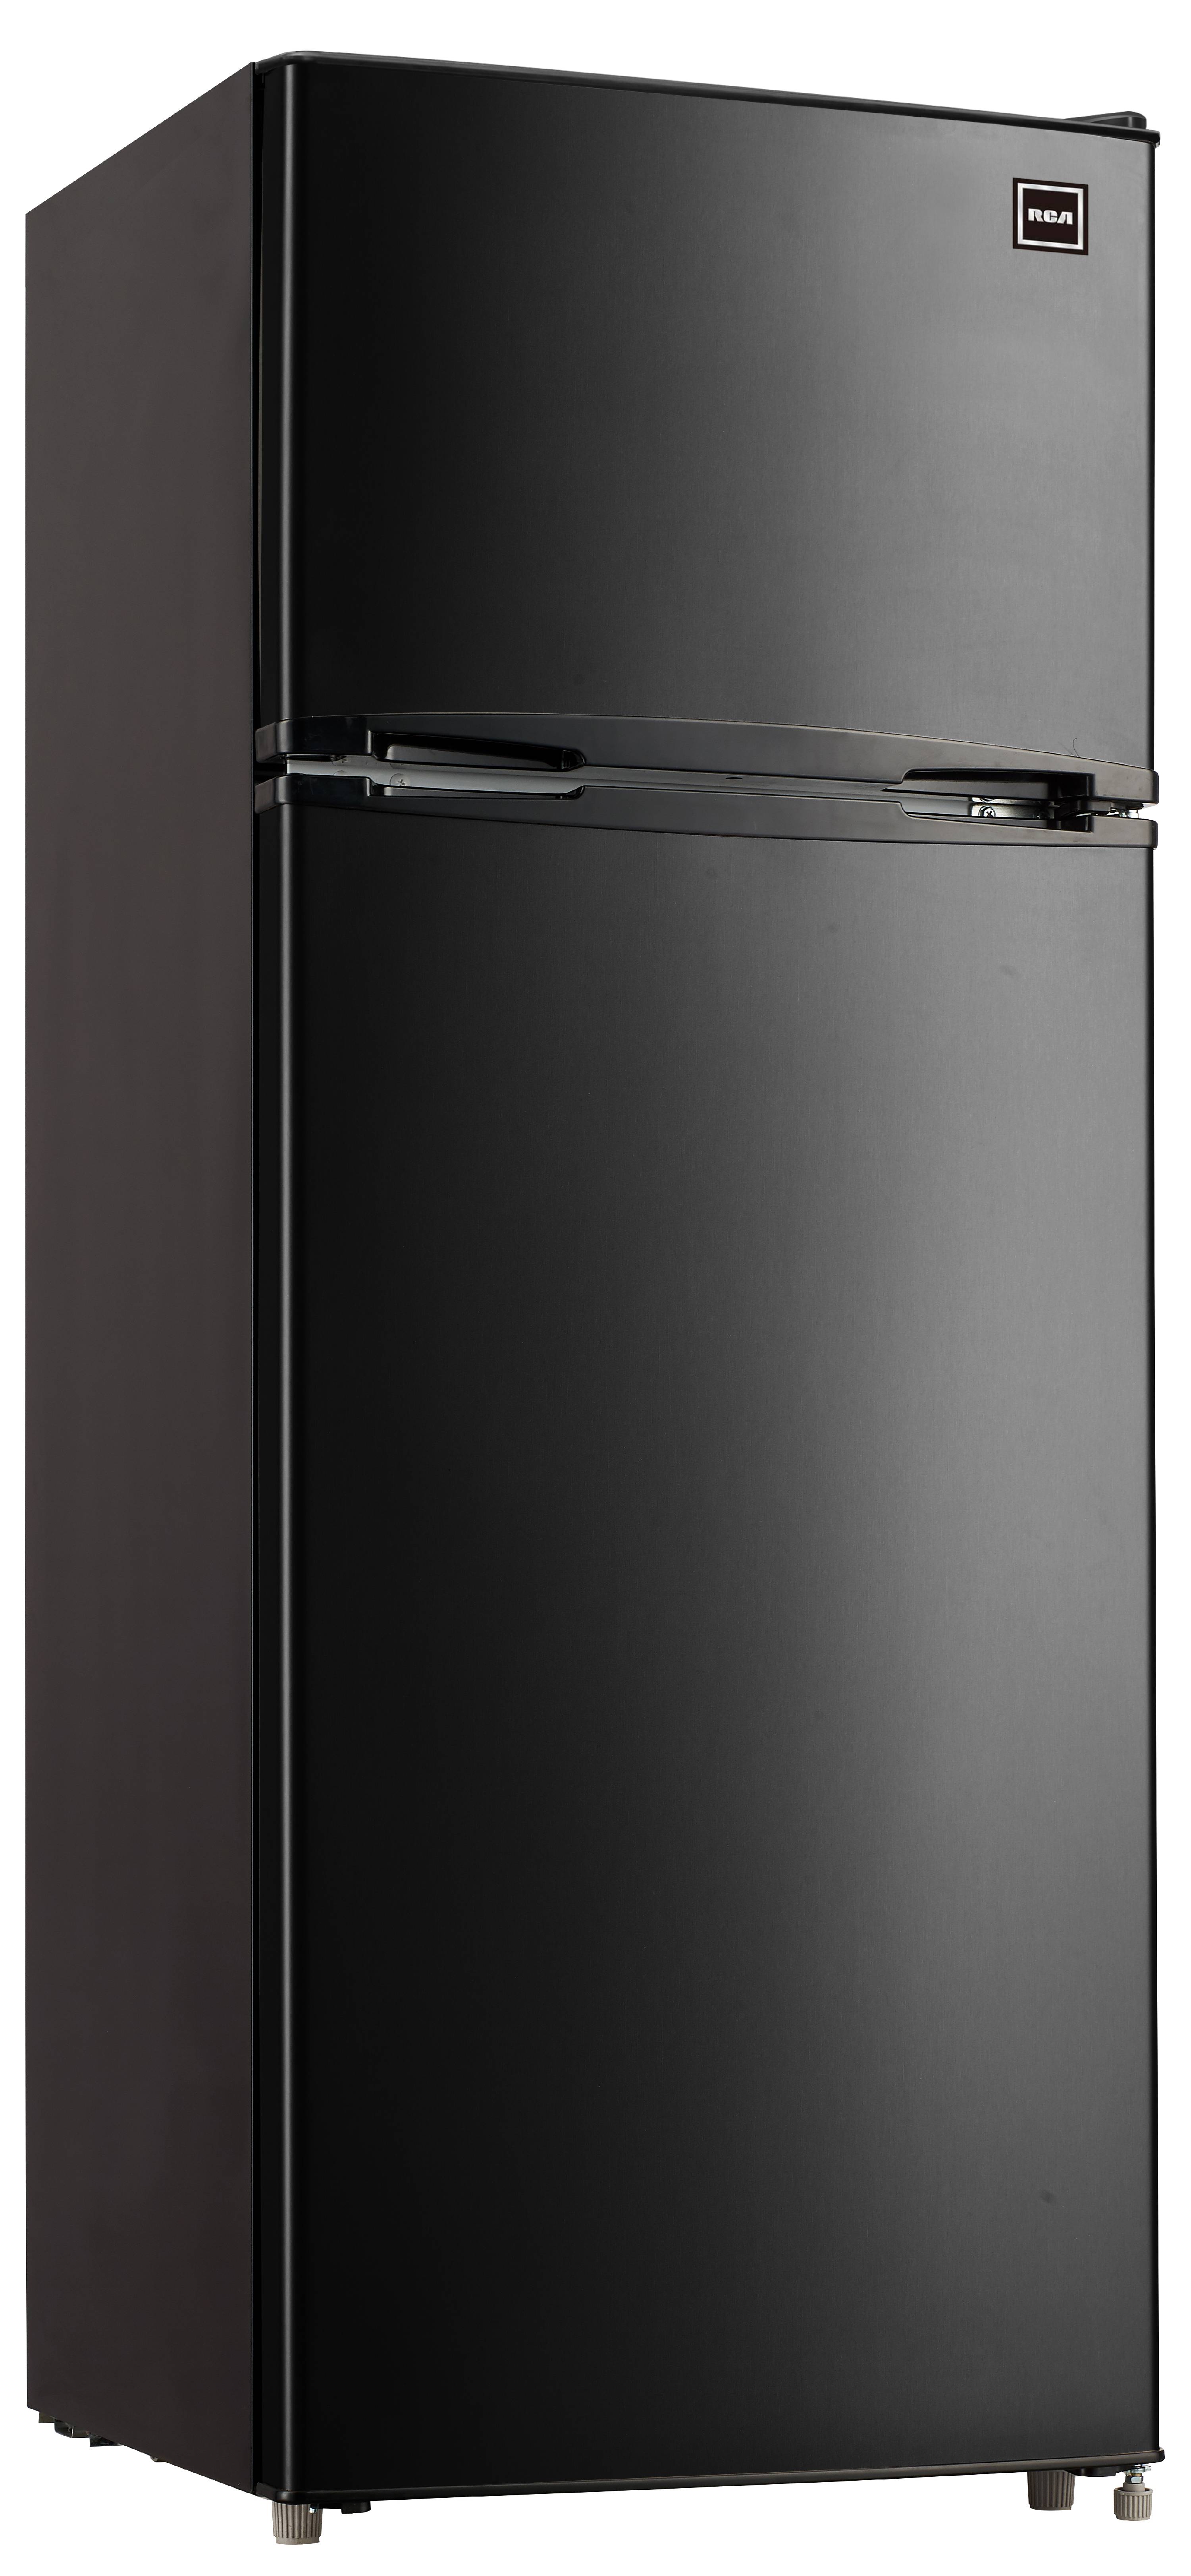 RCA 7.5 Cu. Ft. Top Freezer Refrigerator, RFR741 (Black) - image 1 of 3